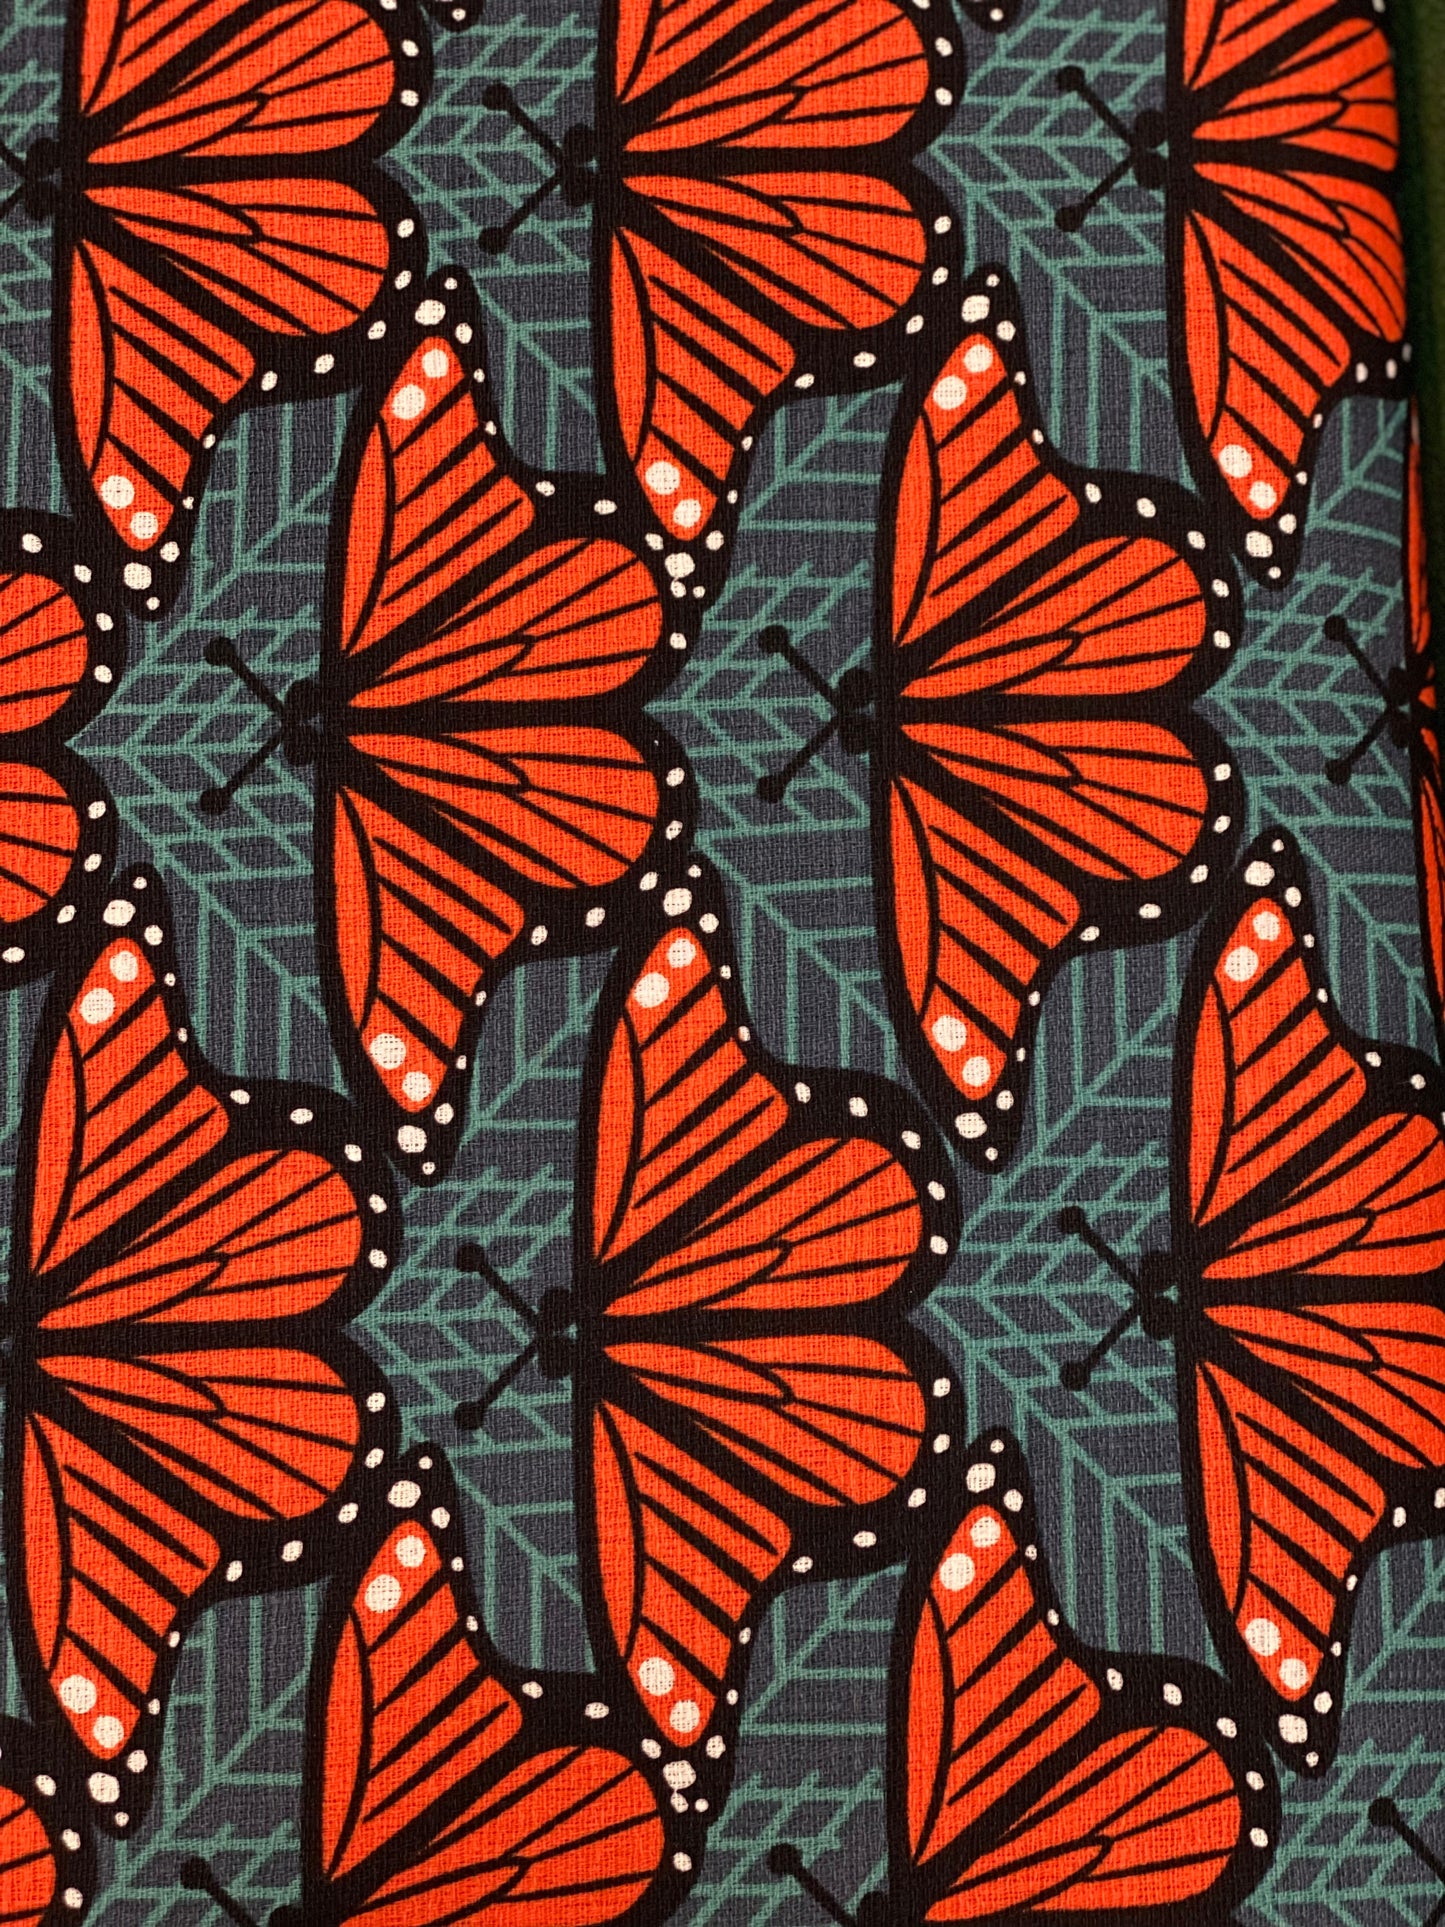 Charley Harper BarkCloth Monarch Butterflies